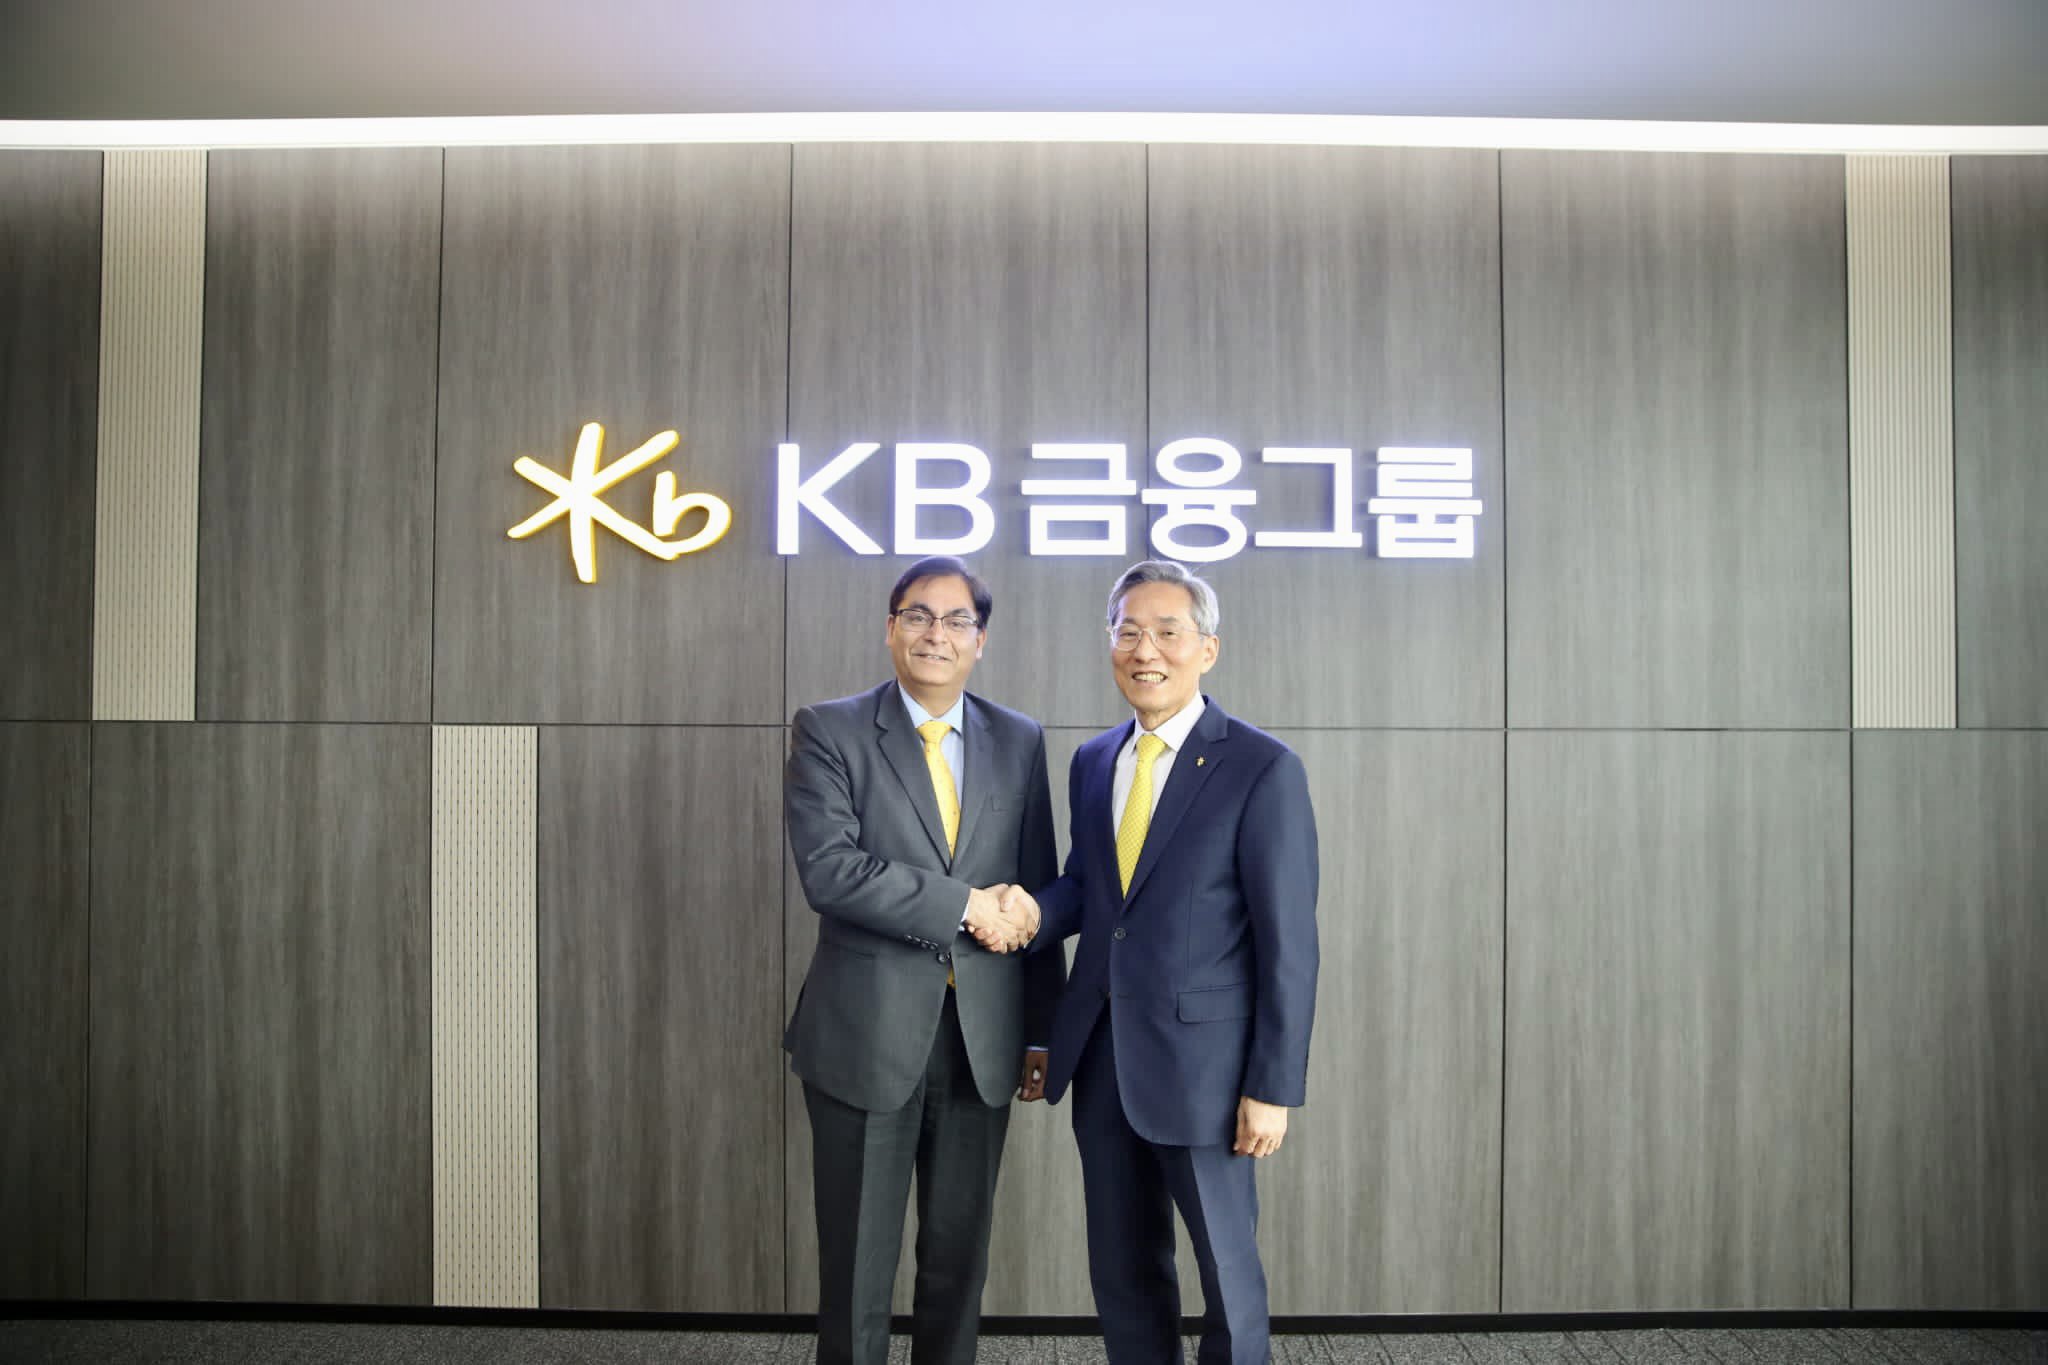 Ambassador Amit Kumar met Mr. Jong Kyoo Yoon, Chairman, KB Financial Group